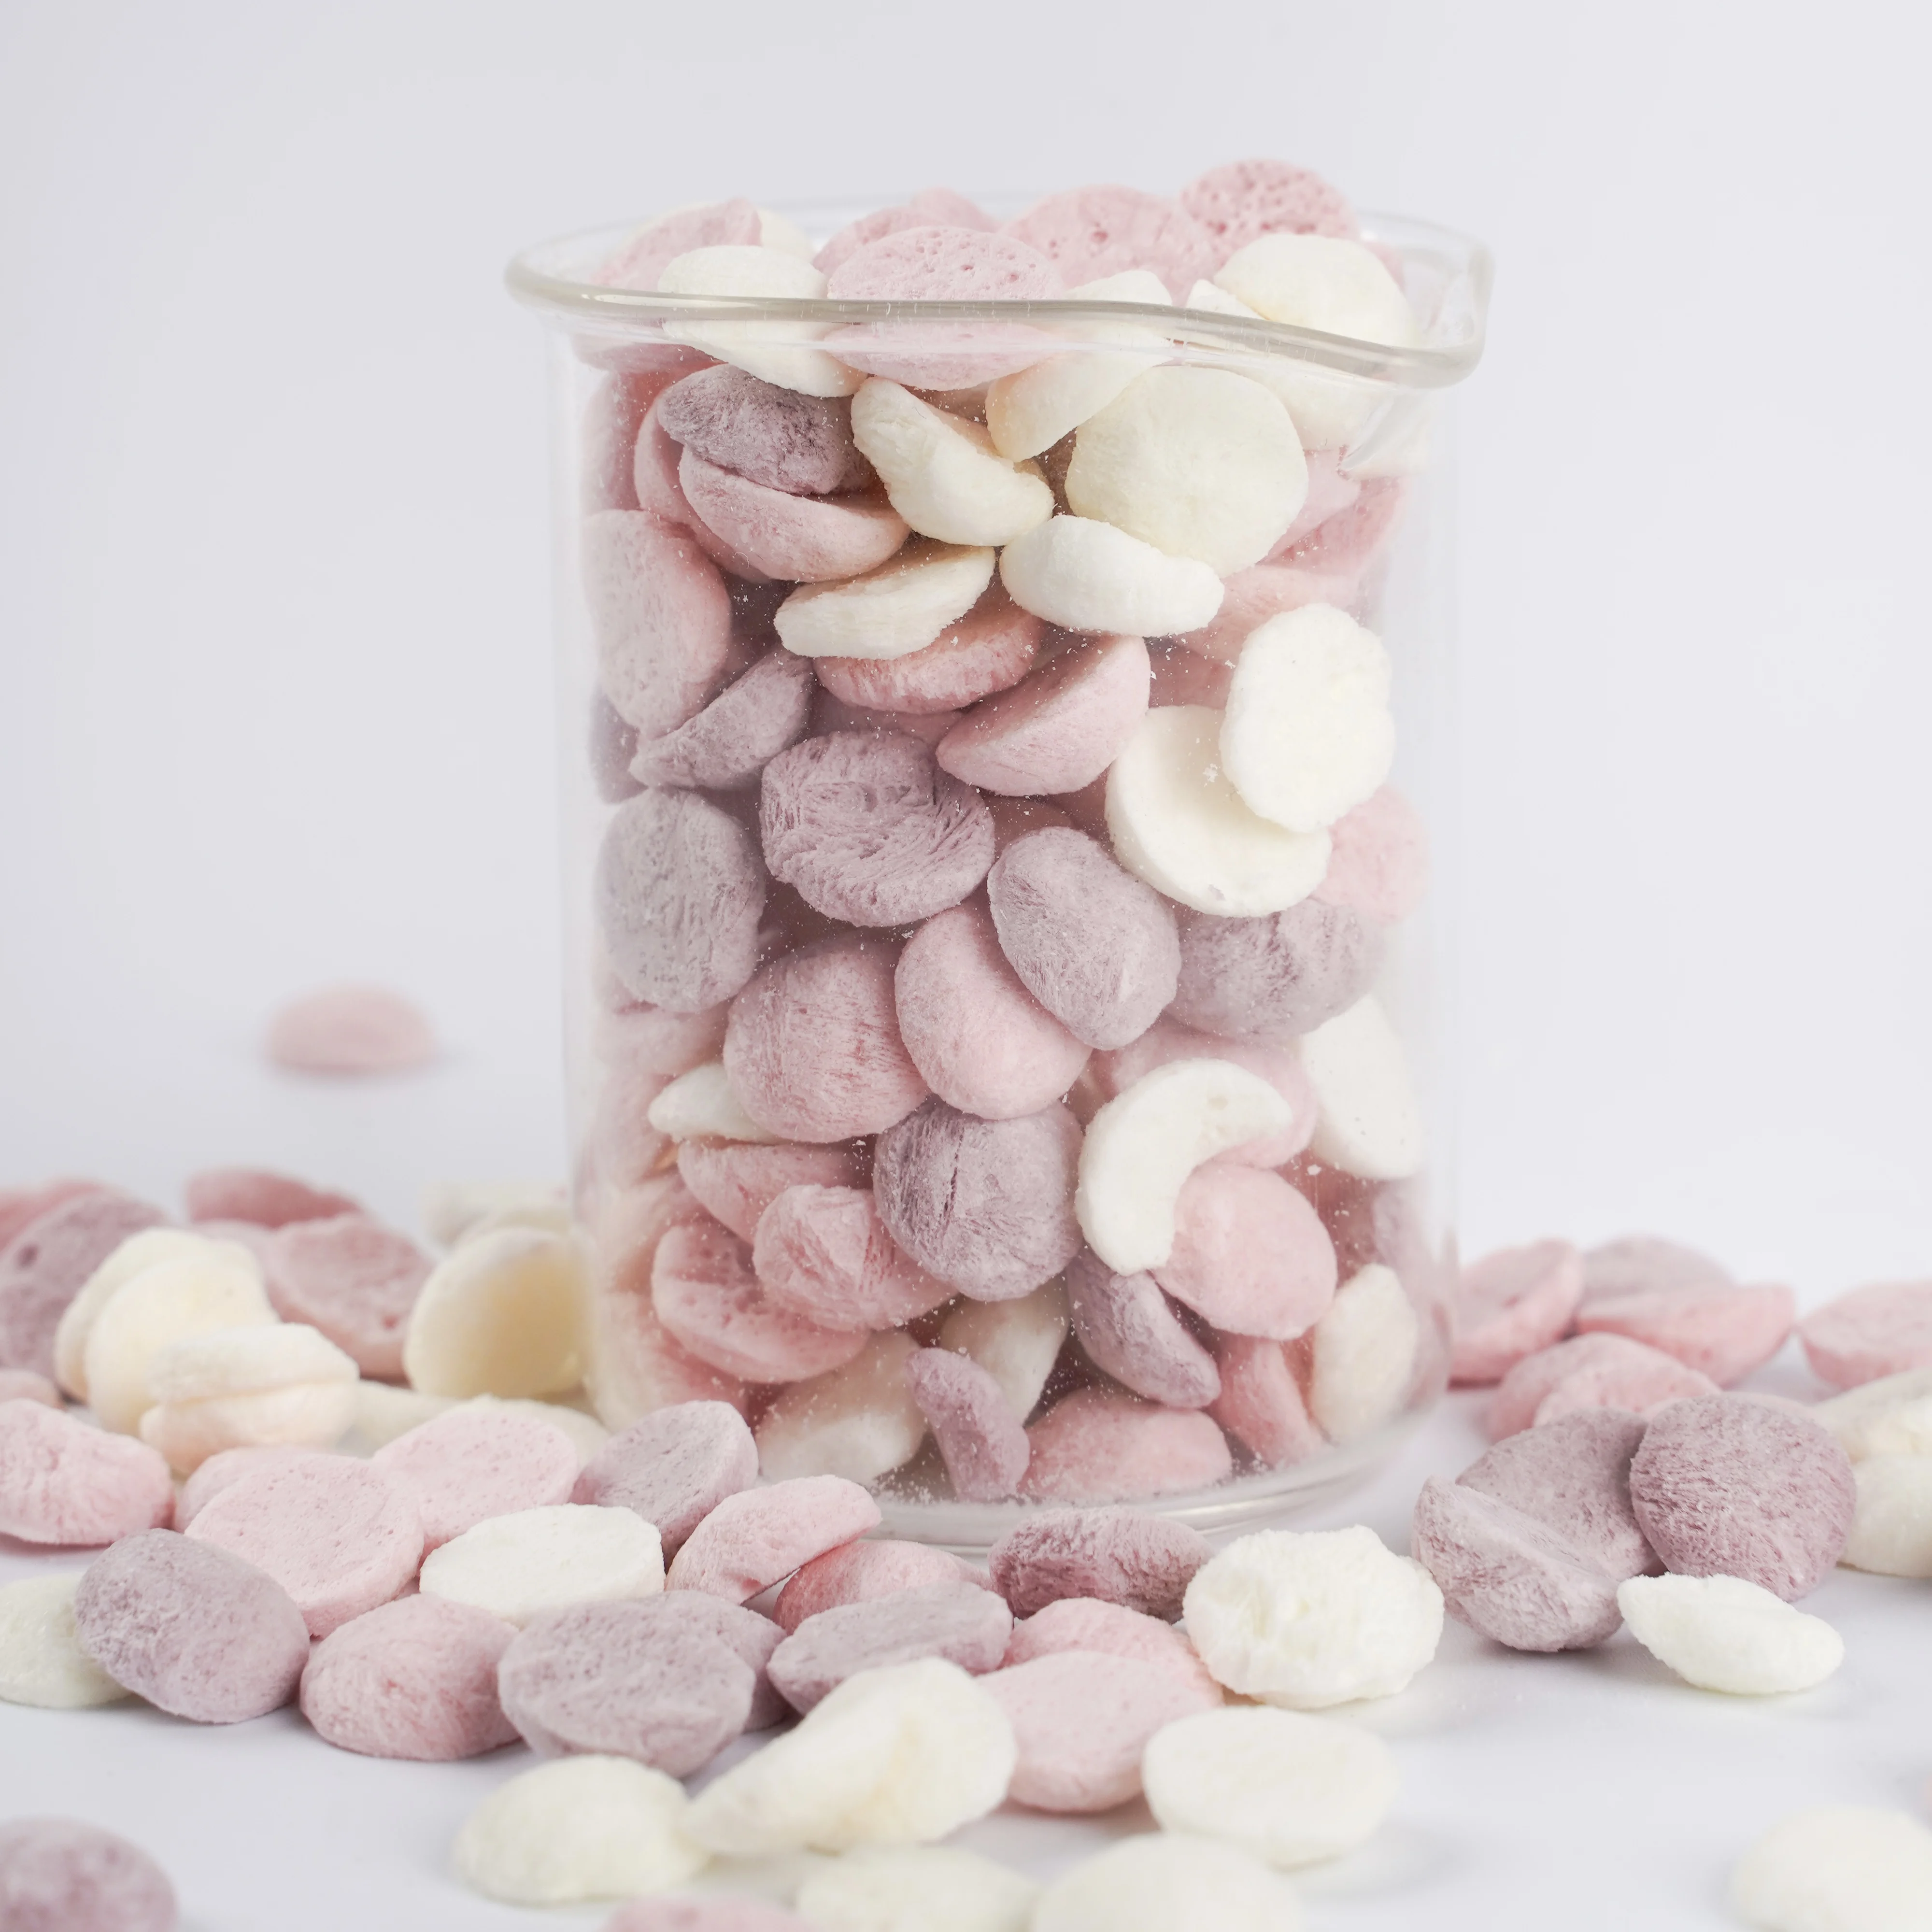 Popular Low MOQ Healthy Food OEM ODM quality nutritious infant snack Probiotics freeze dried fruit yogurt candy melts (1600342426055)